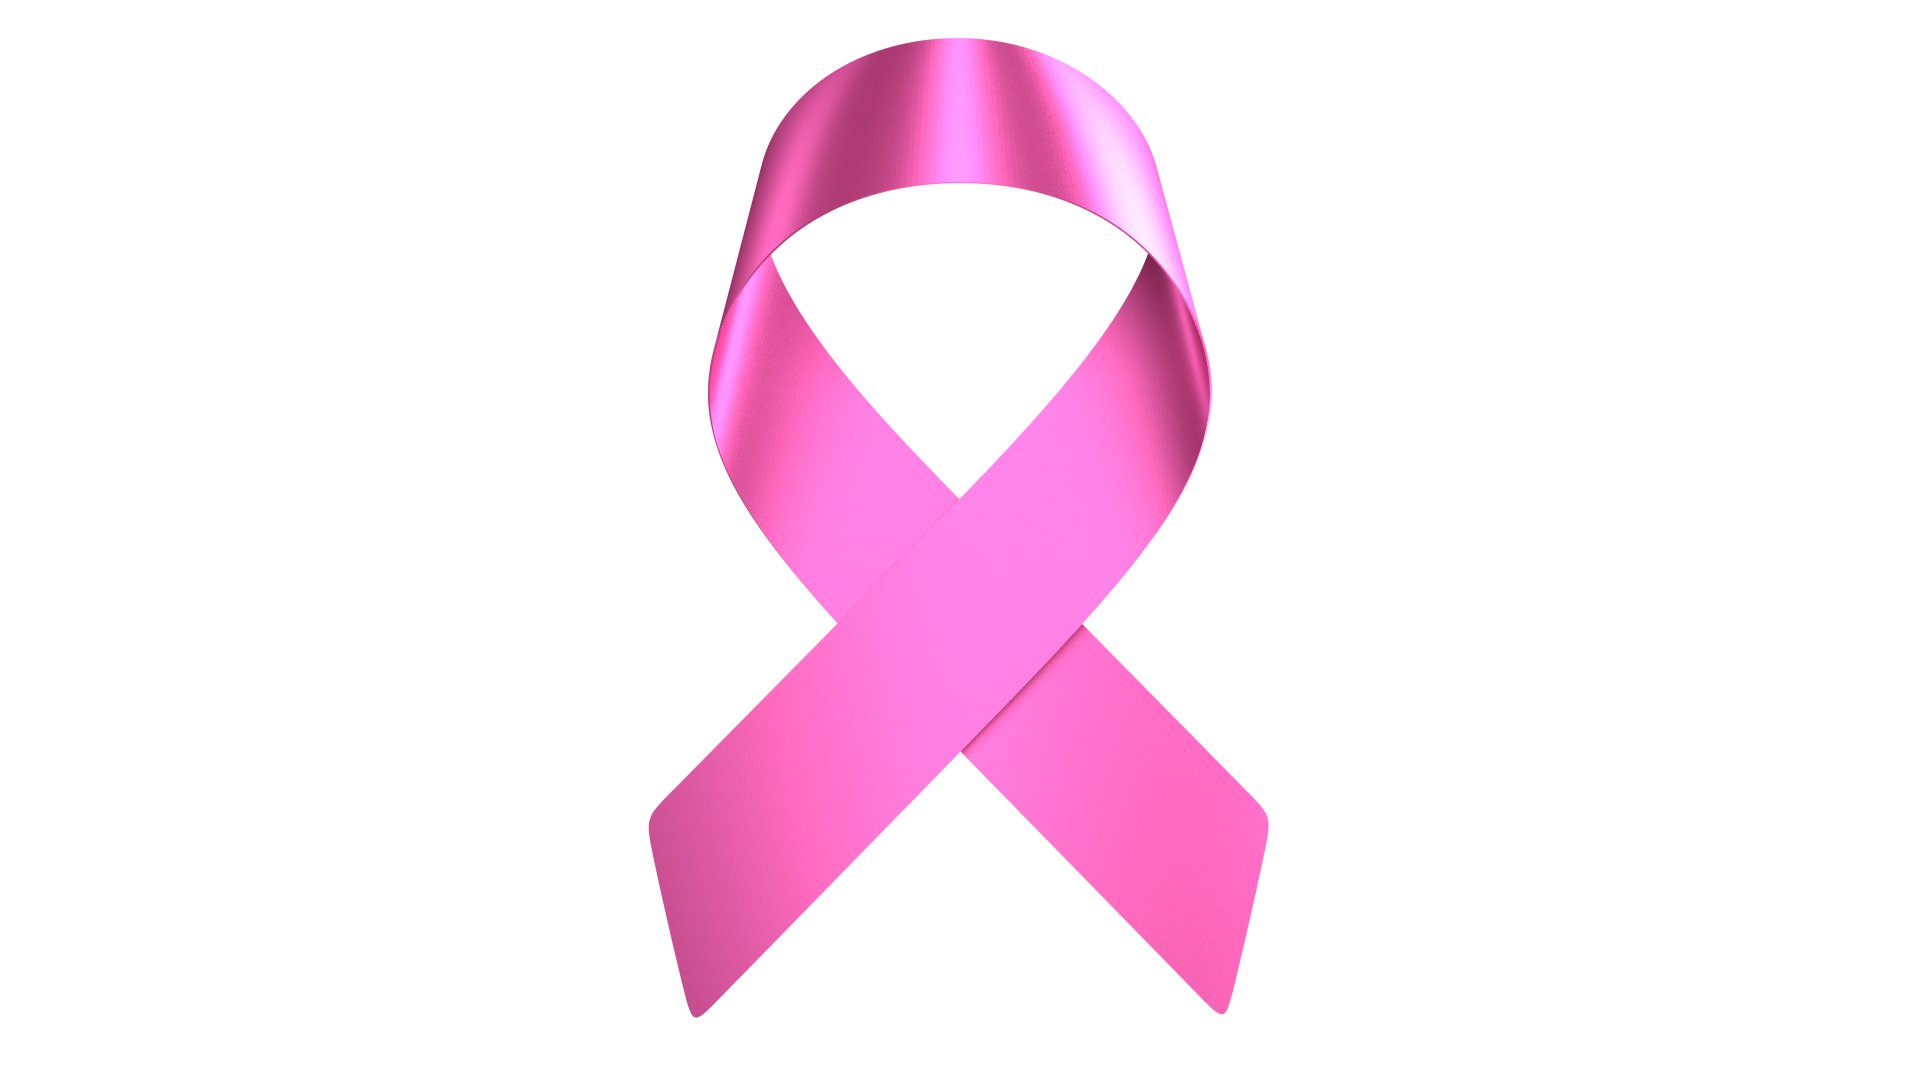 Ribbon Cancer Symbol PNG High-Quality Image